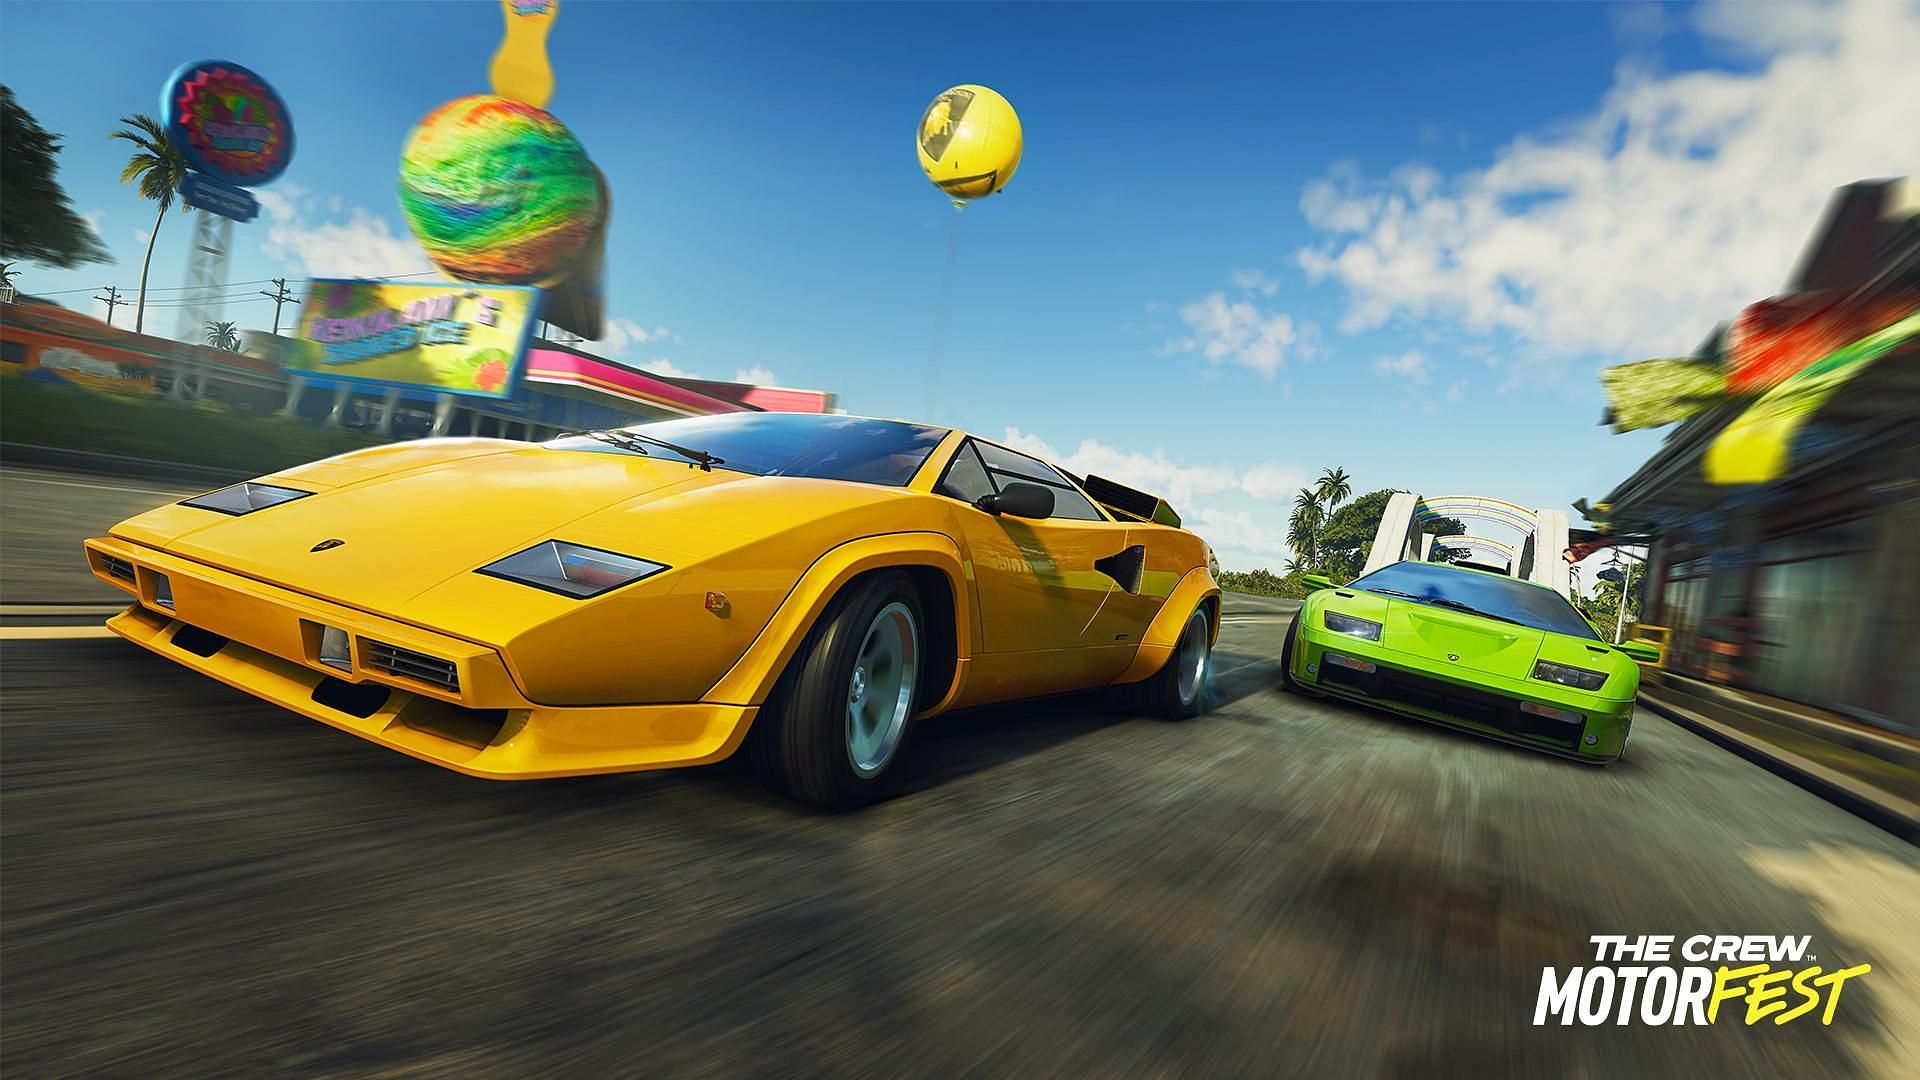 Lamborghinis have a dedicated playlist in The Crew Motorfest (Image via Ubisoft)